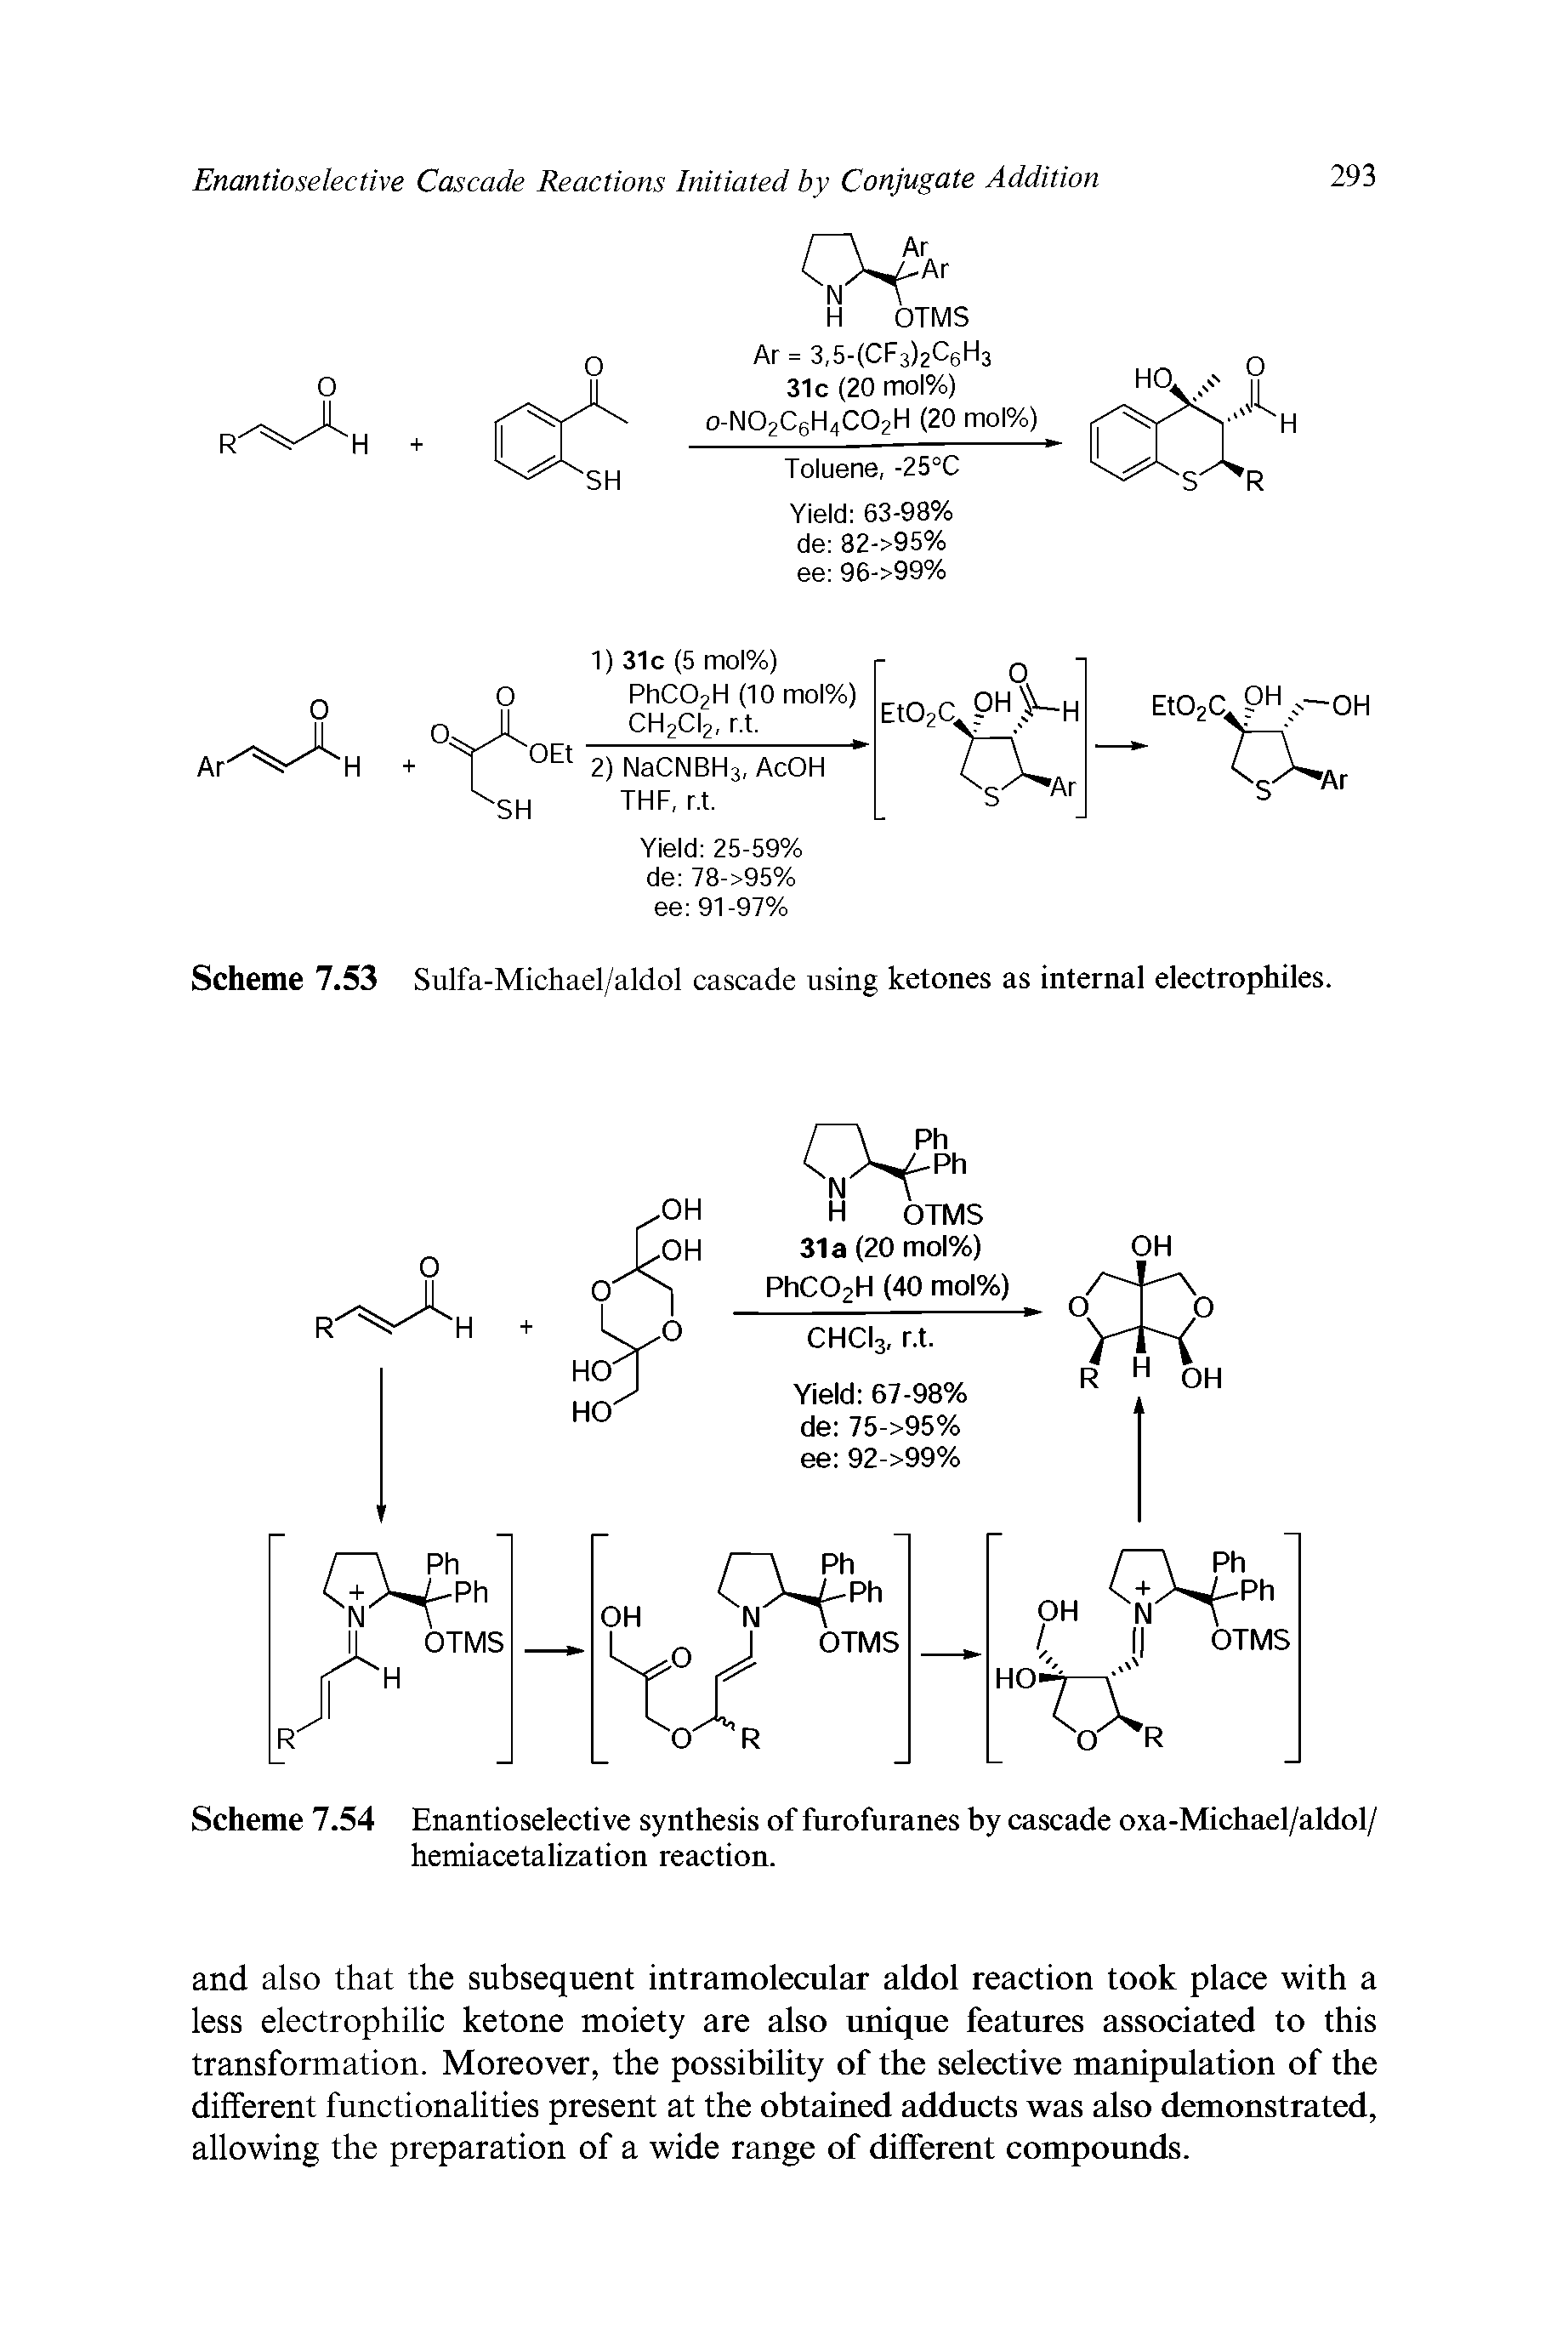 Scheme 7.54 Enantioselective synthesis of furofuranes by cascade oxa-Michael/aldol/ hemiacetalization reaction.